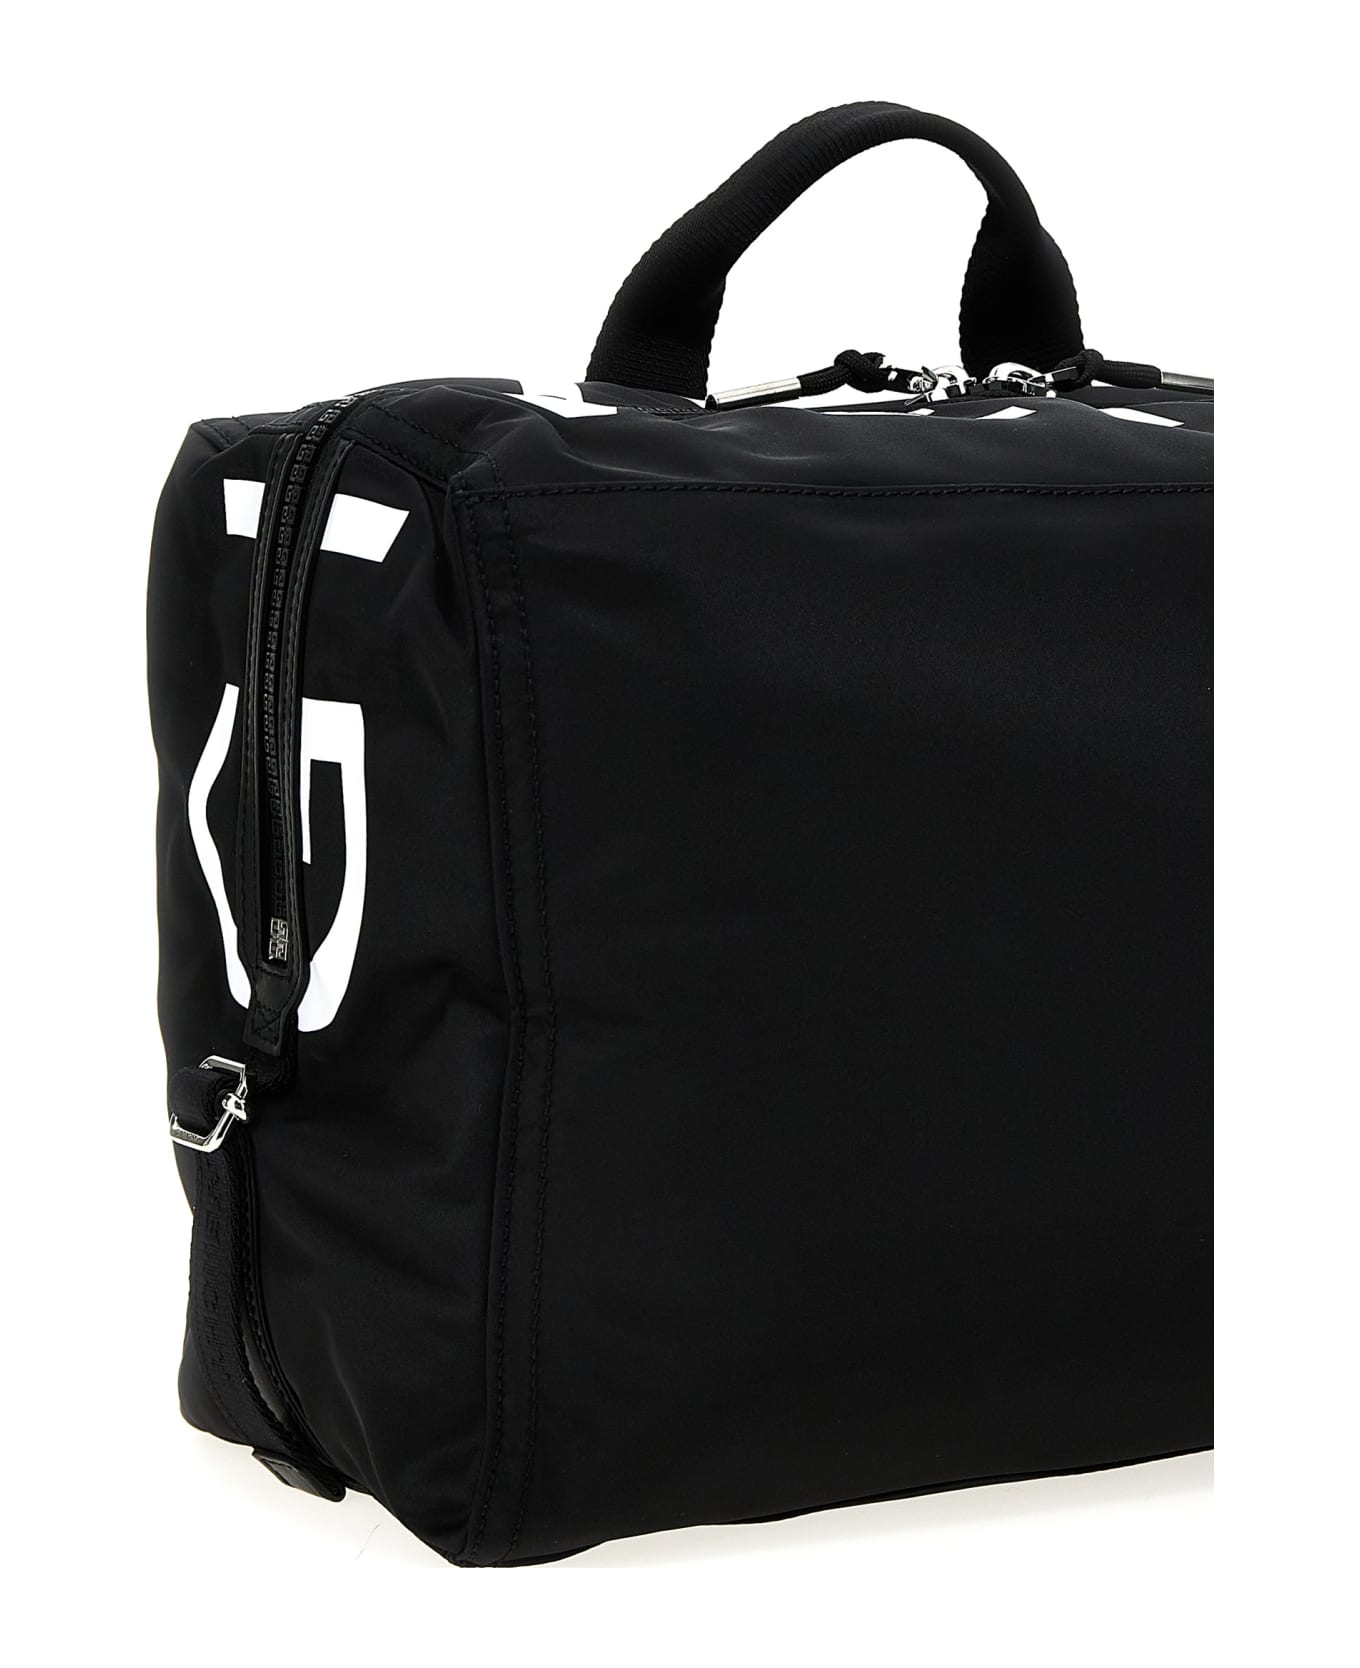 Givenchy Pandora Medium Bag - Black White